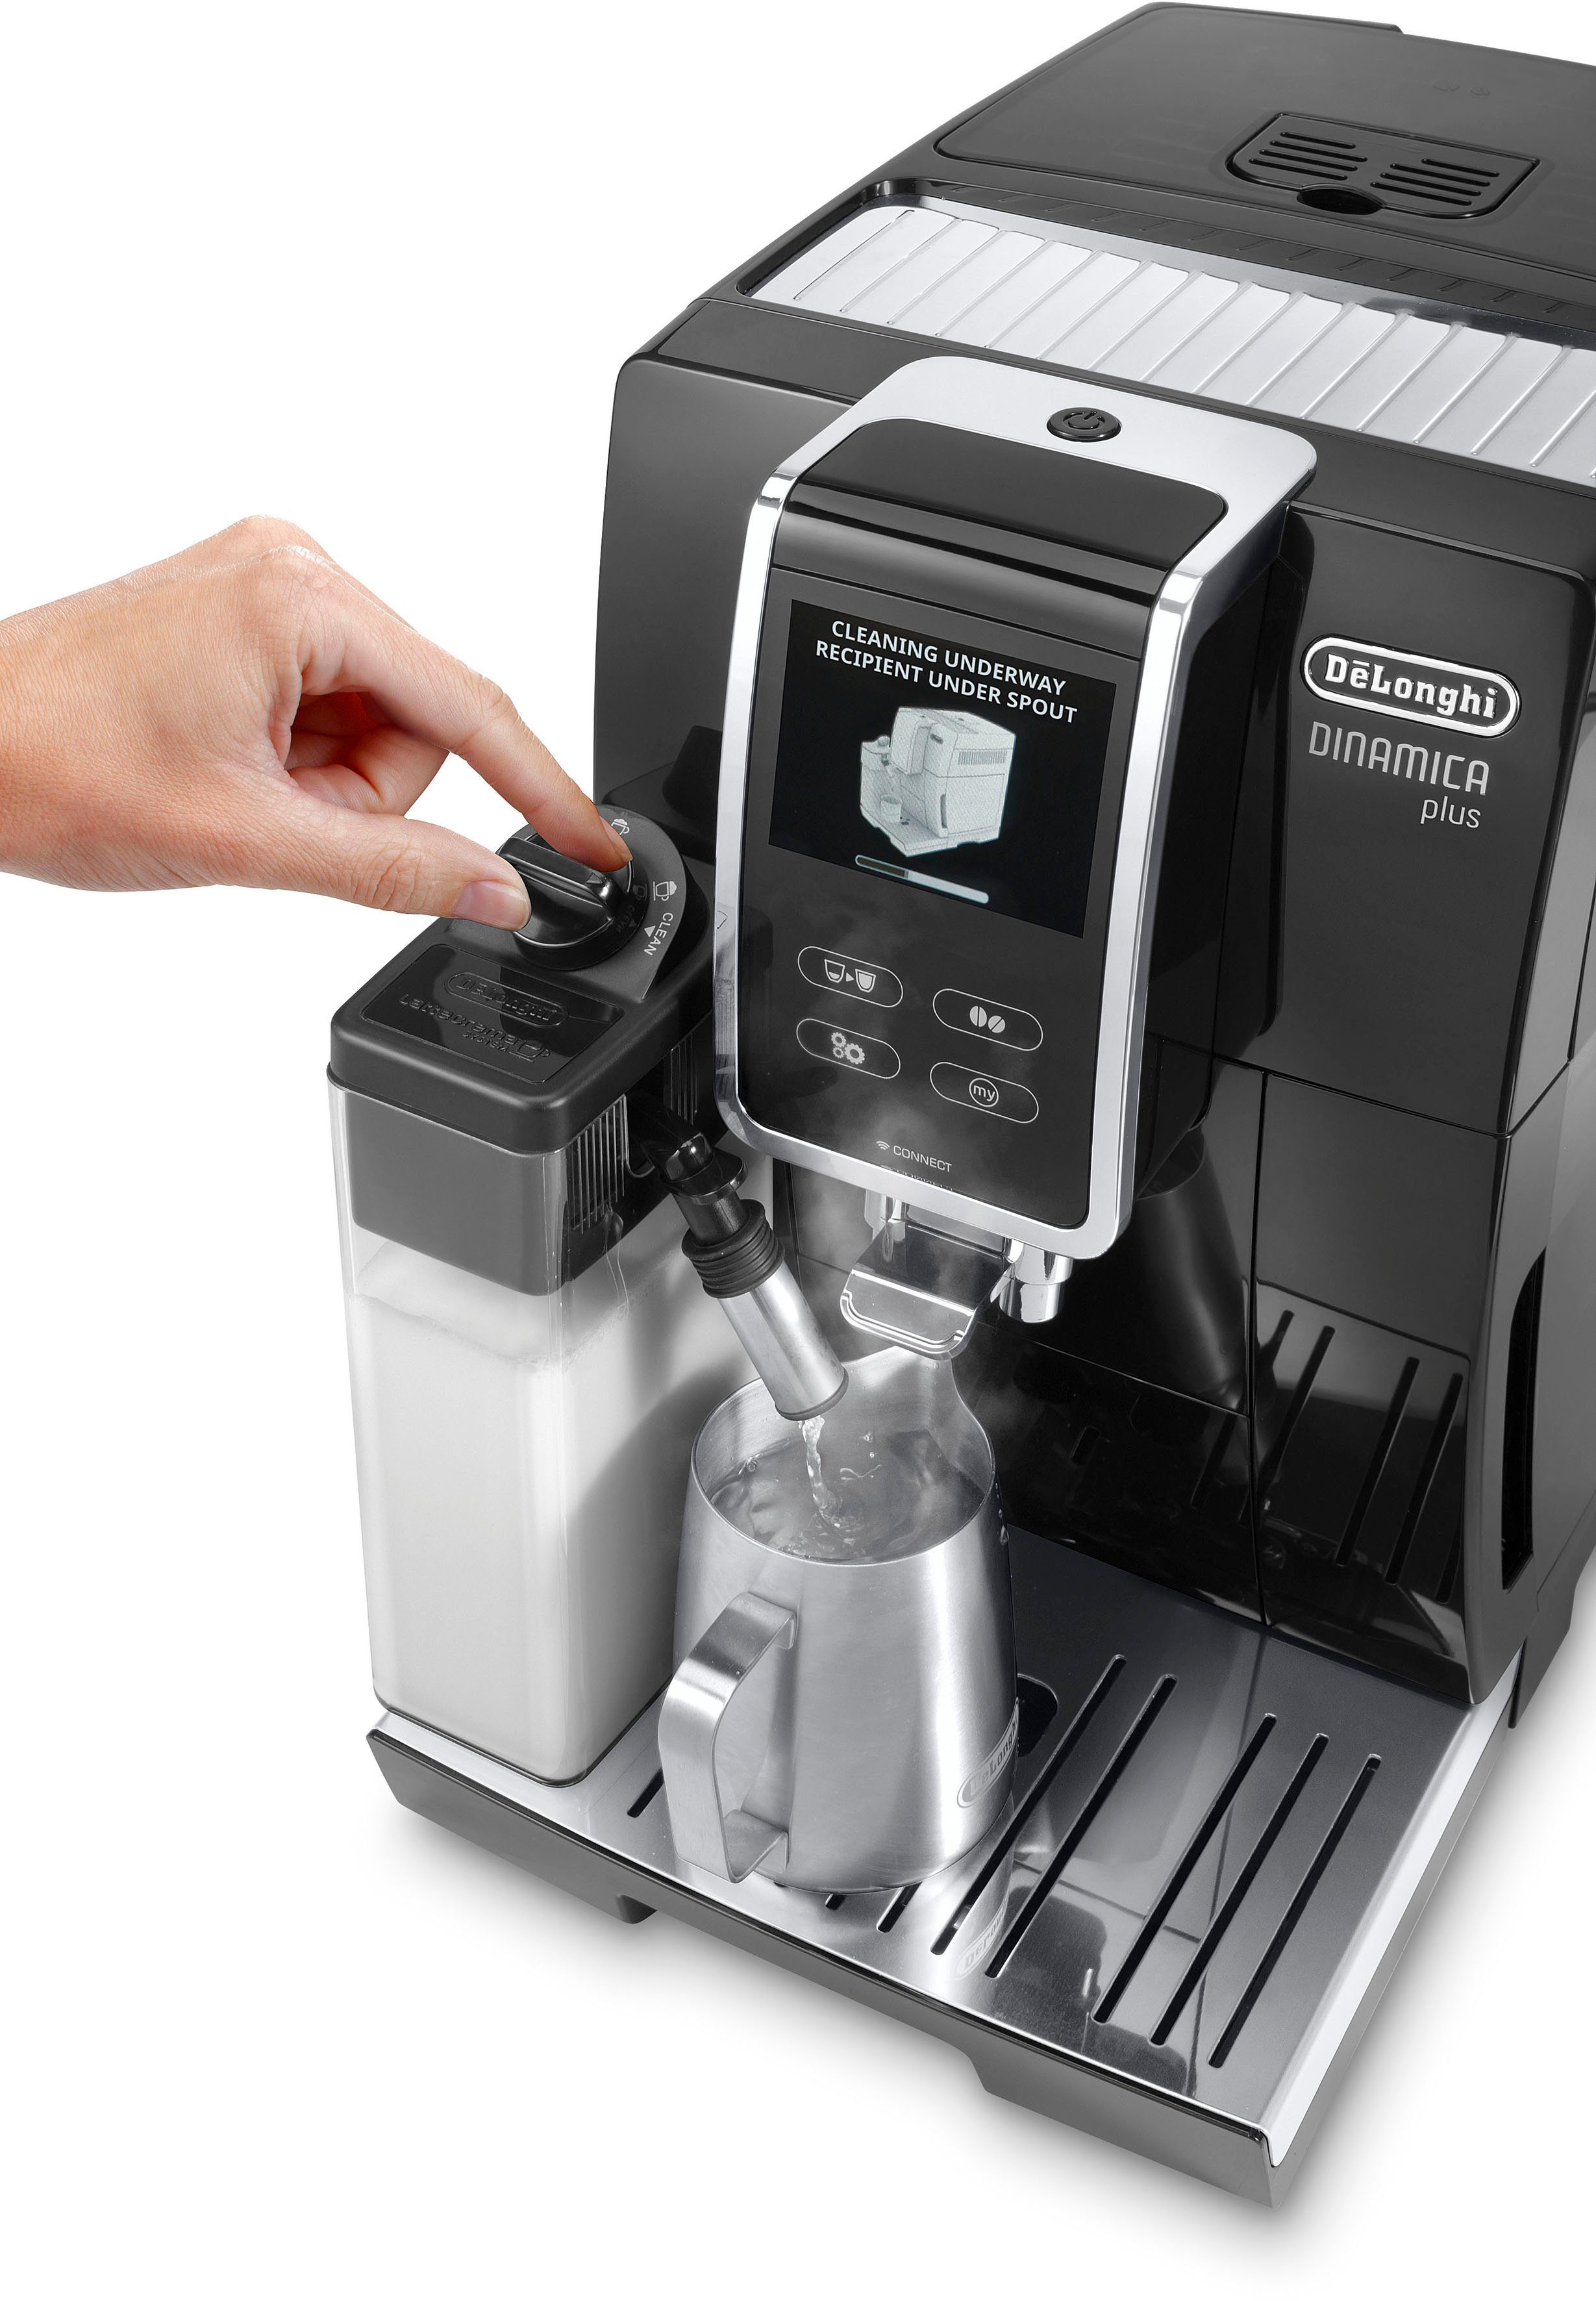 370.70.B, LatteCrema mit Milchsystem Plus Dinamica ECAM Kaffeekannenfunktion Kaffeevollautomat und De'Longhi